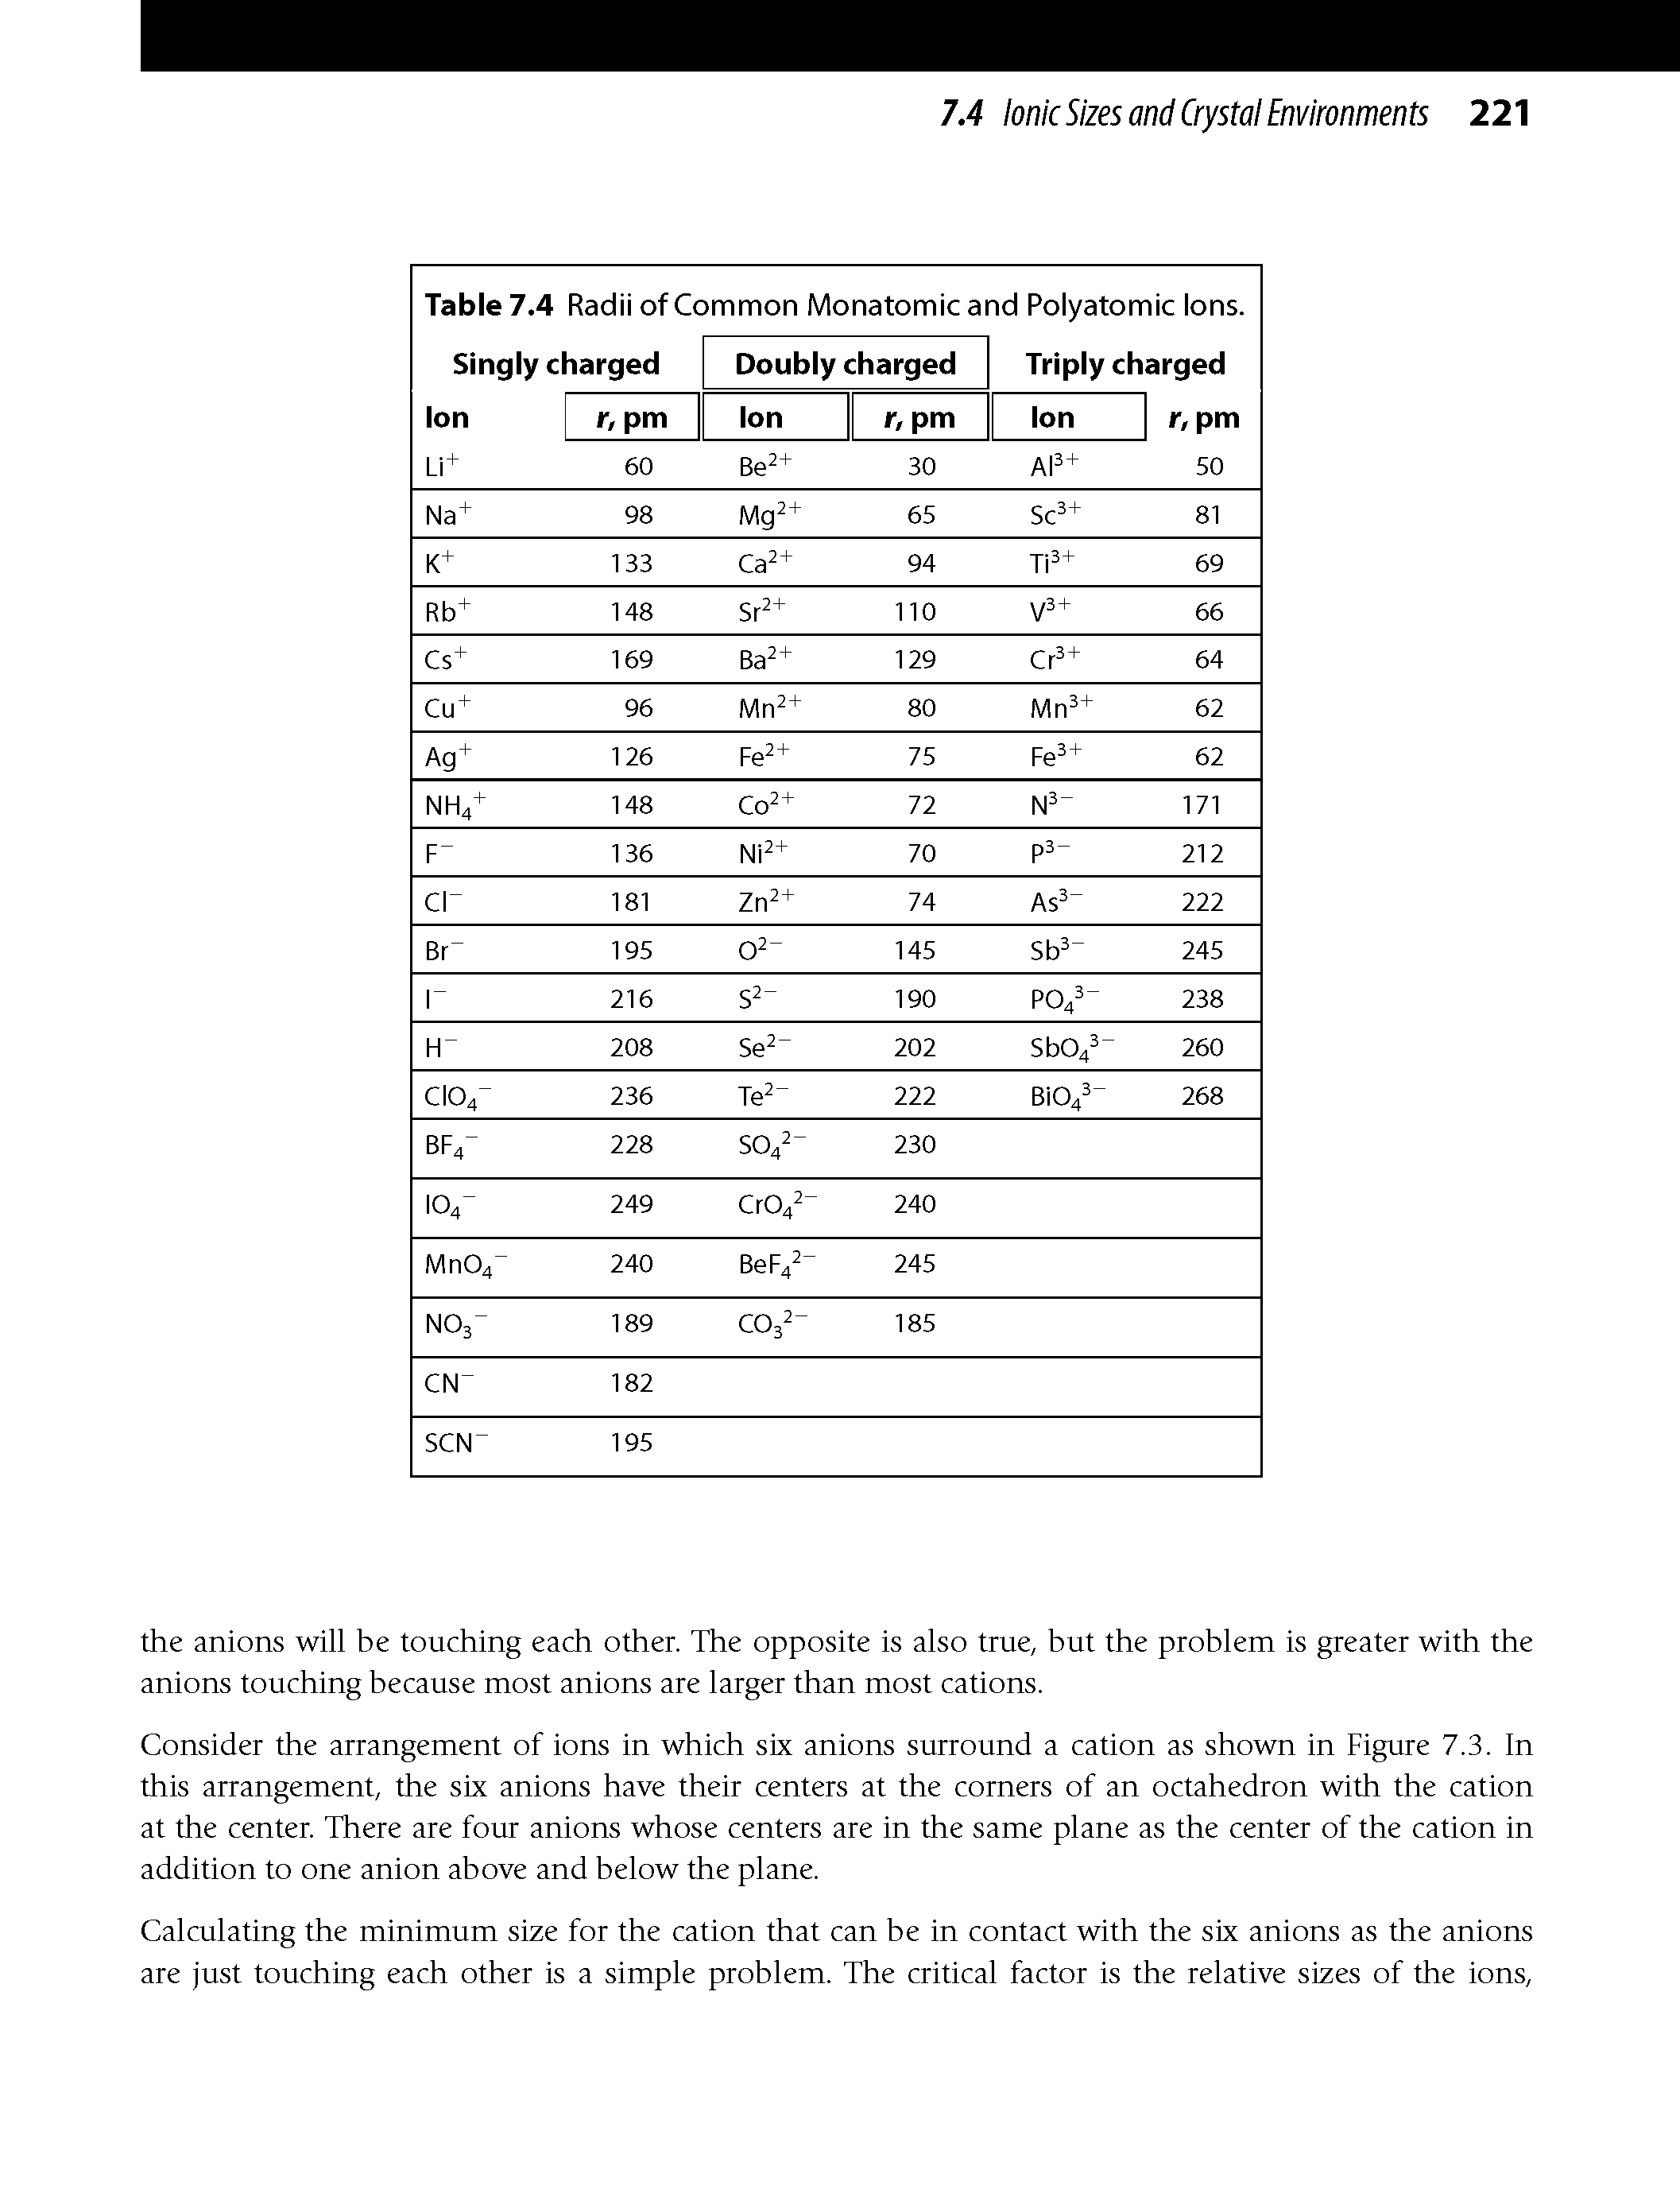 Table 7.4 Radii of Common Monatomic and Polyatomic Ions. ...